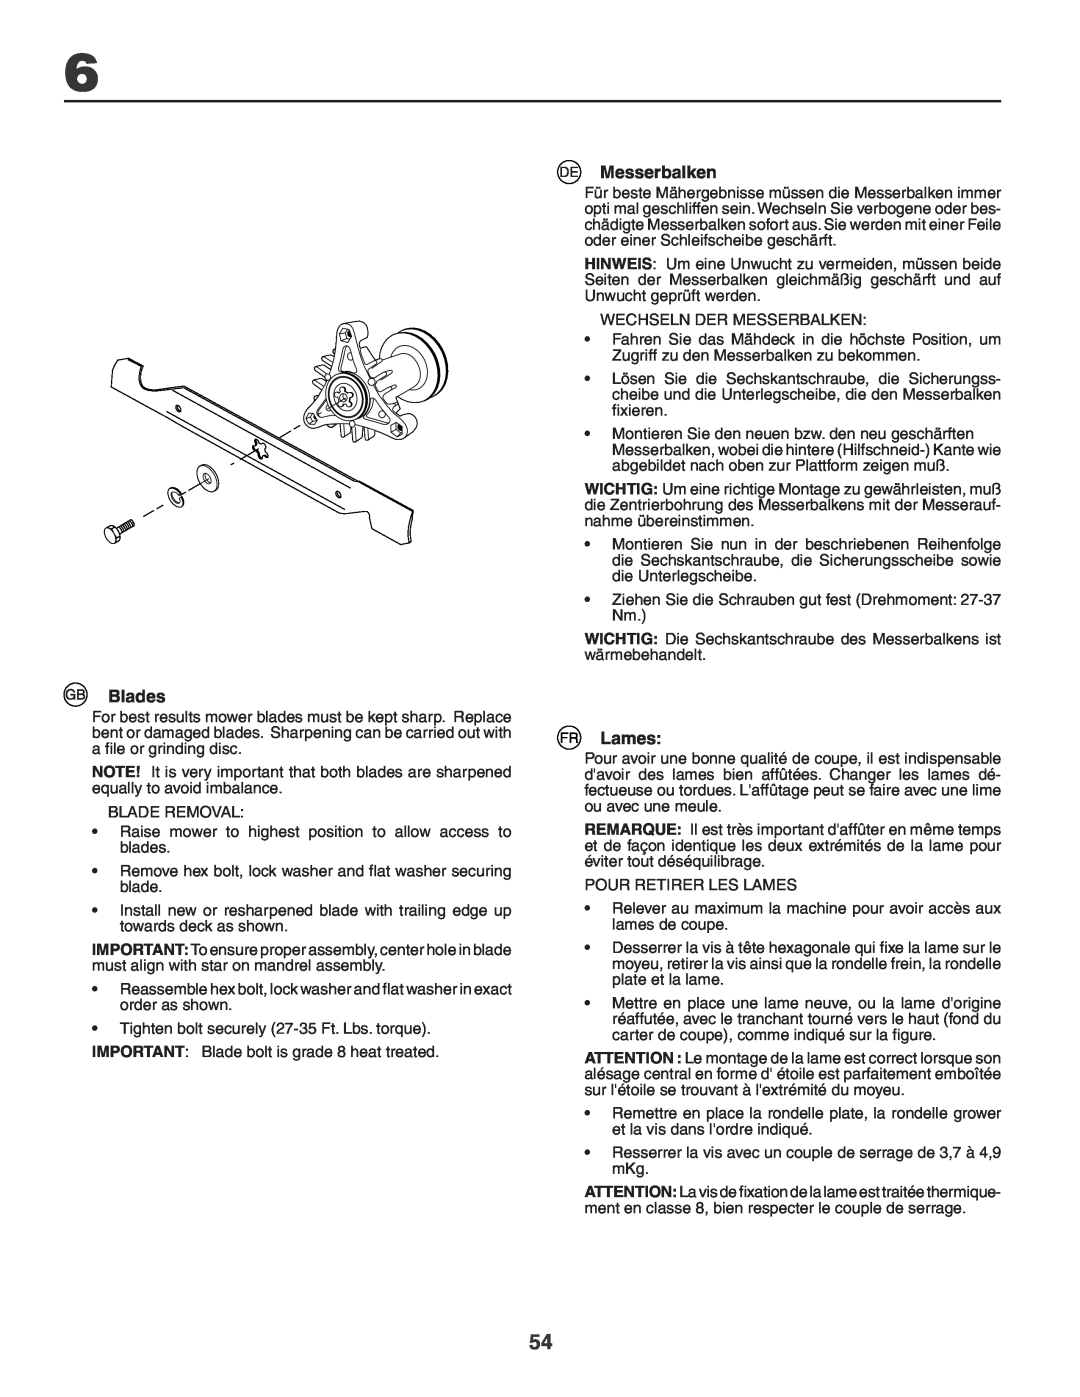 Husqvarna YTH180XP instruction manual Blades, Messerbalken, Lames 